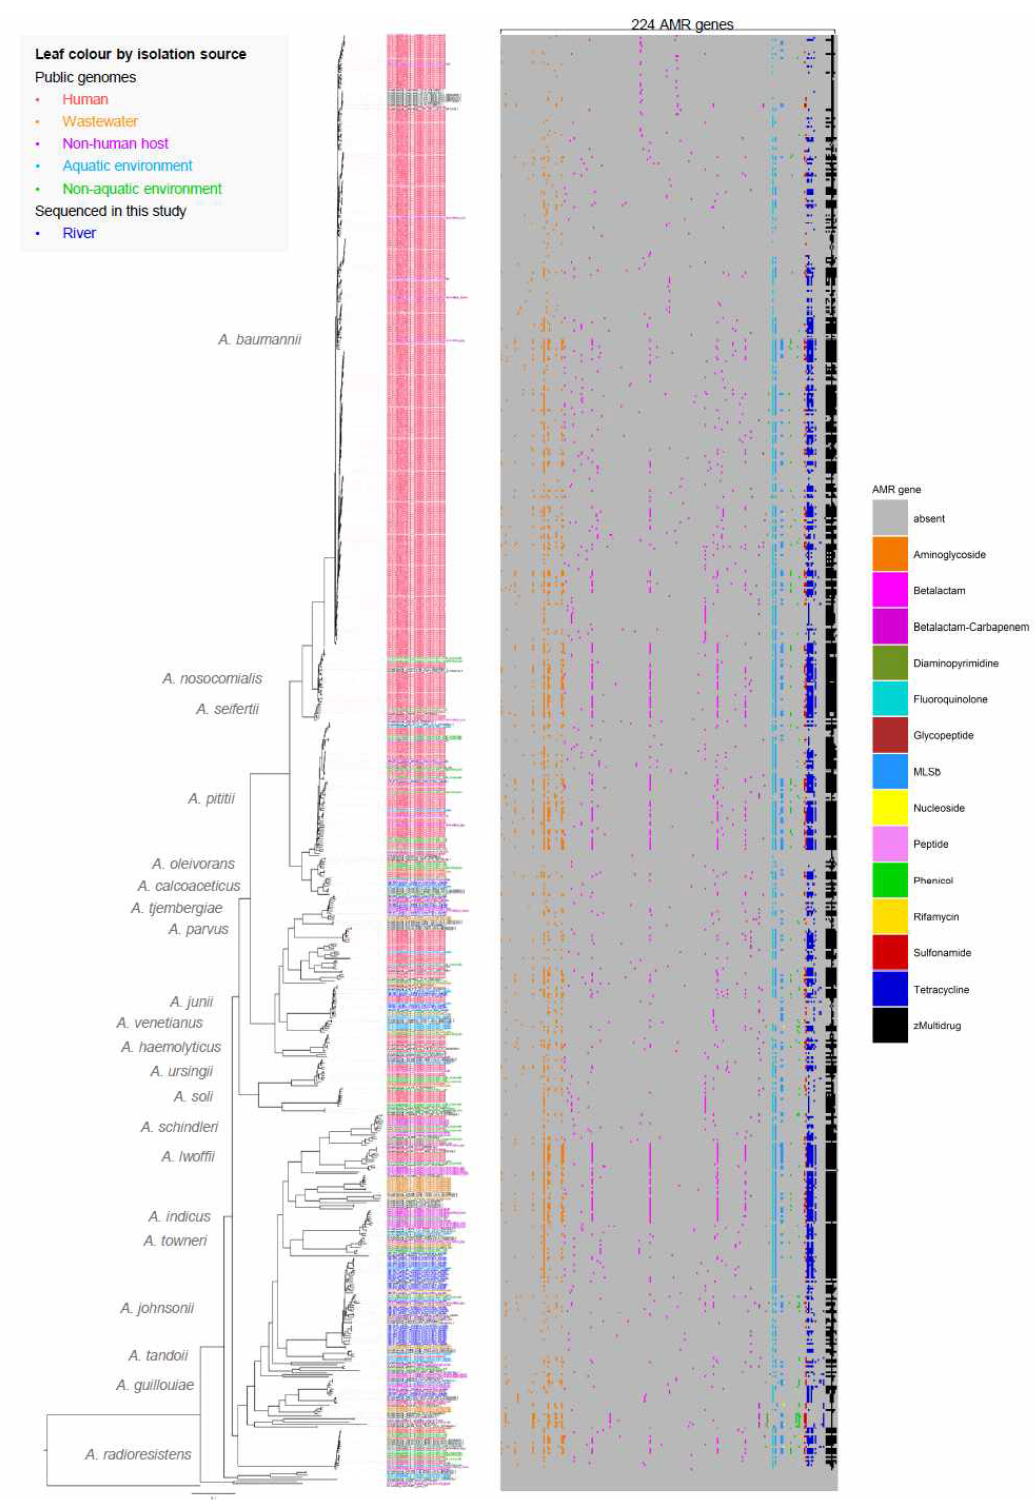 Nanopore 데이터를 제외한 708개 아시네토박터 유전체 데이터로부터 추정된 유전체 간 진화 관계(A)와 내성유전자 프로파일(B)